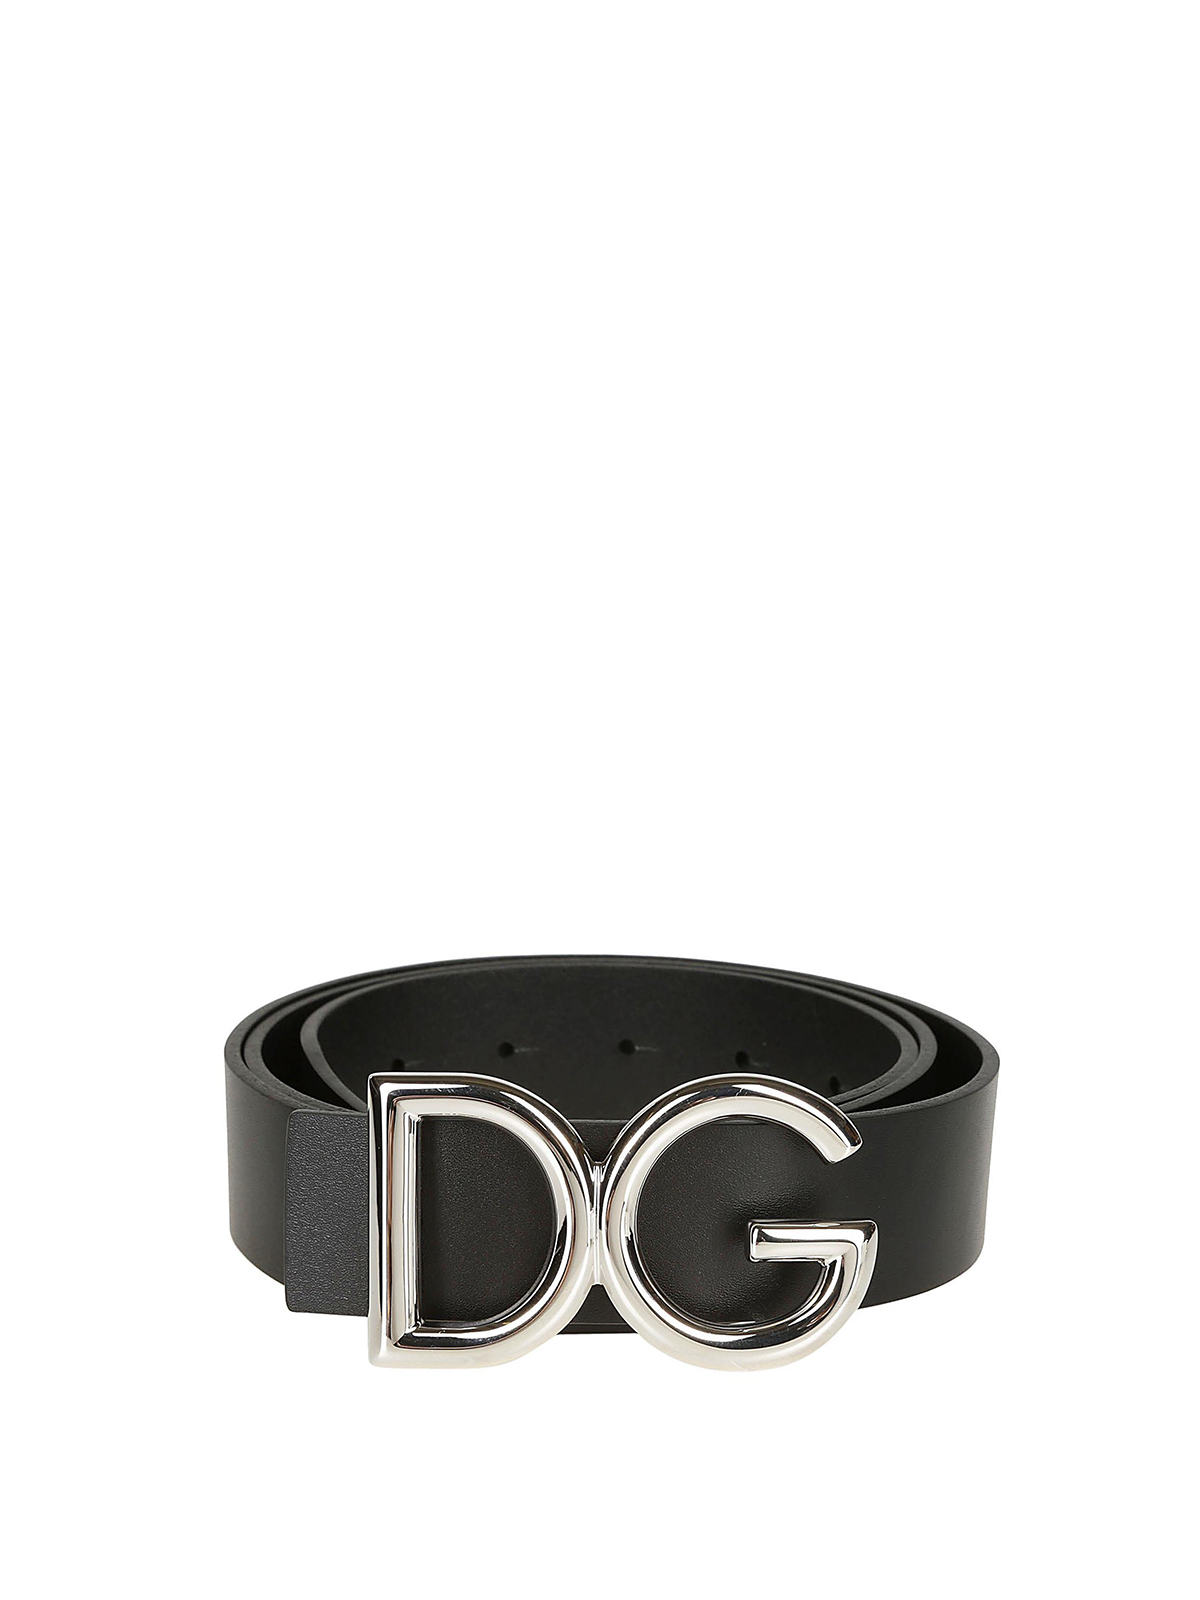 Cinturones Dolce & Gabbana - - D&G - BC4248AC49387653